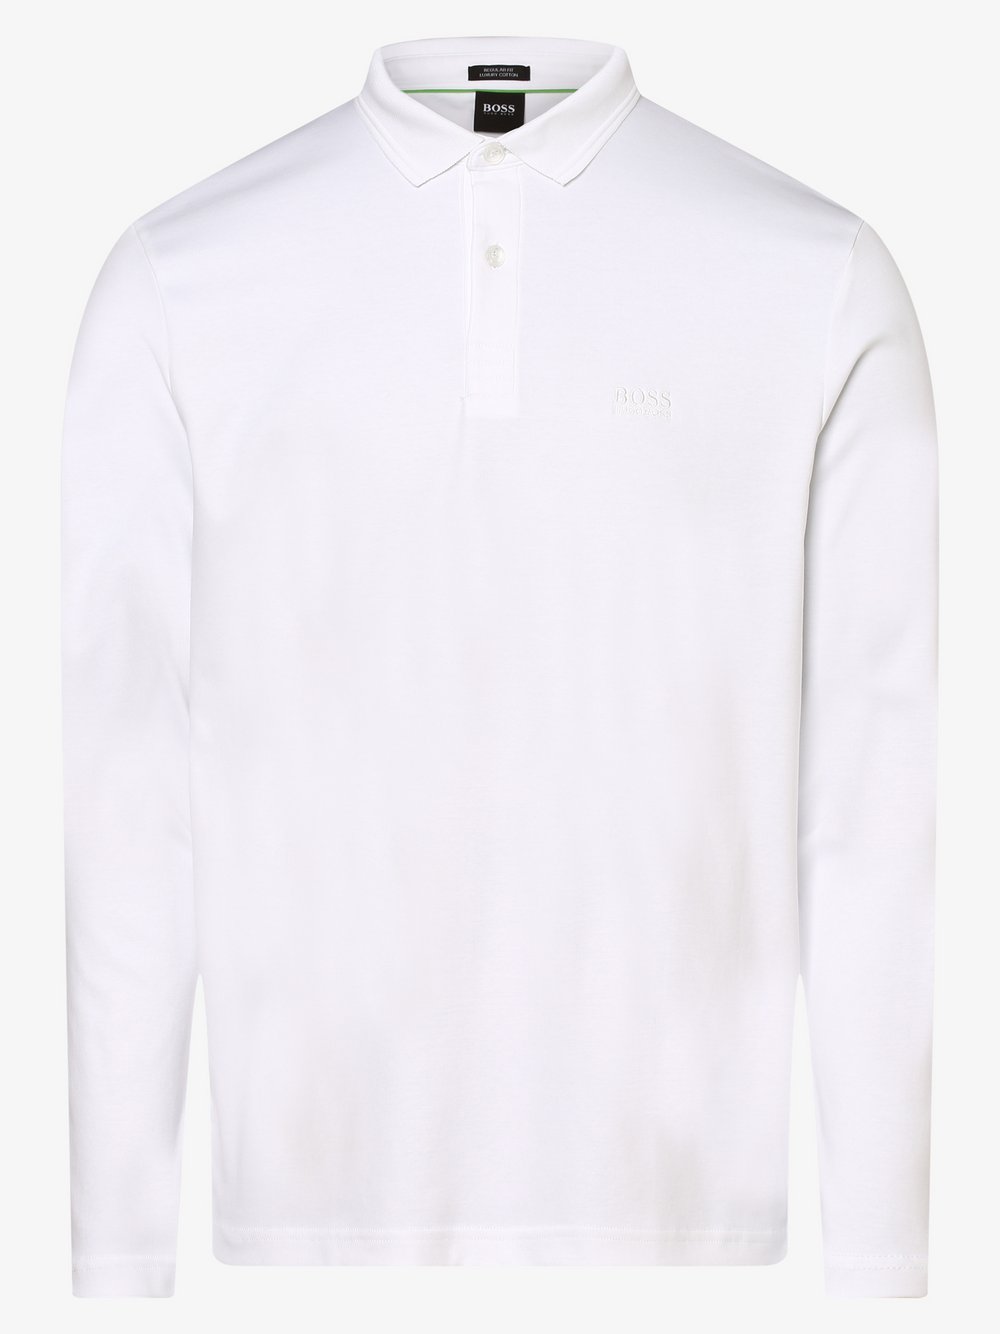 BOSS Athleisure - Męska koszulka polo – Pirol, biały